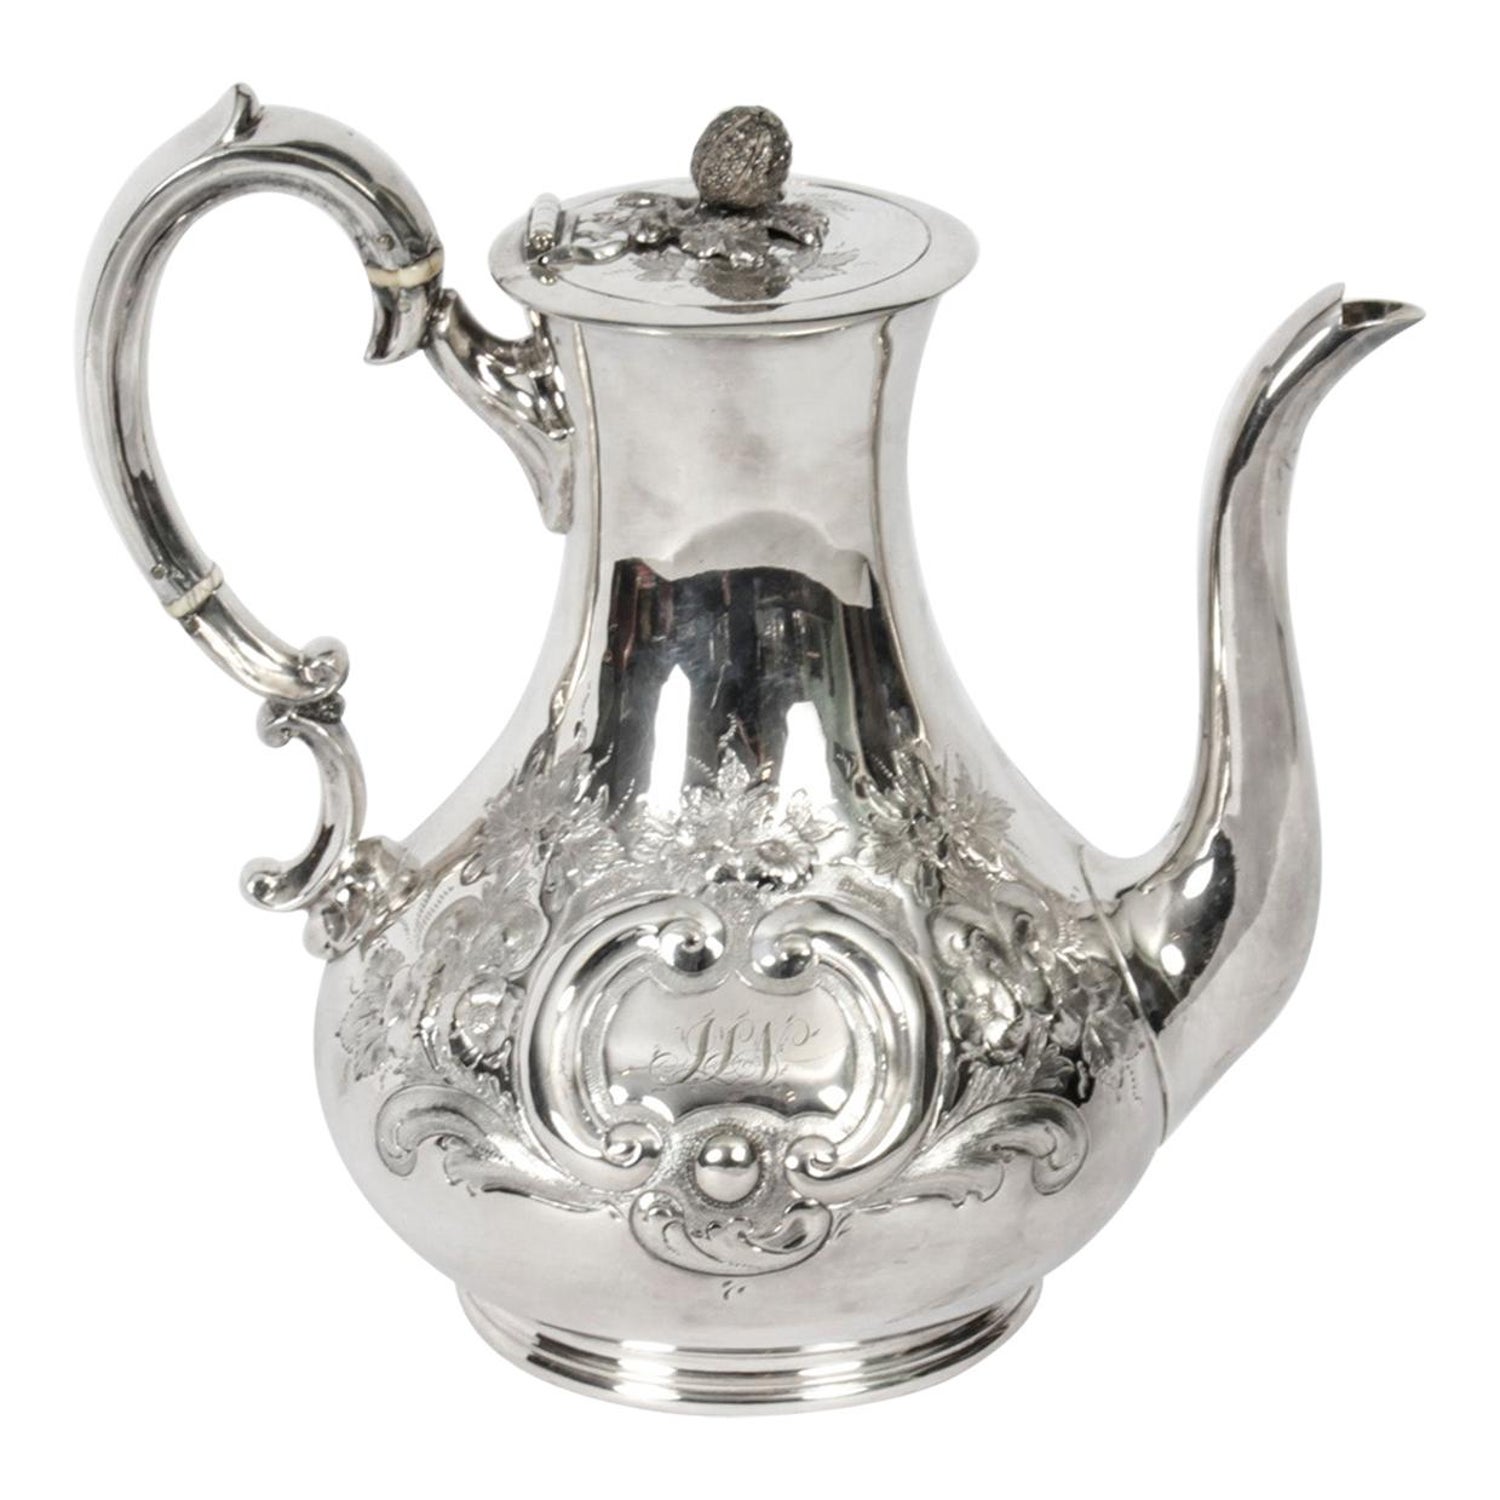 https://a.1stdibscdn.com/antique-victorian-silver-plated-coffee-pot-boardman-glossop-co-19th-century-for-sale/1121189/f_241564021623846772338/24156402_master.jpg?width=1500